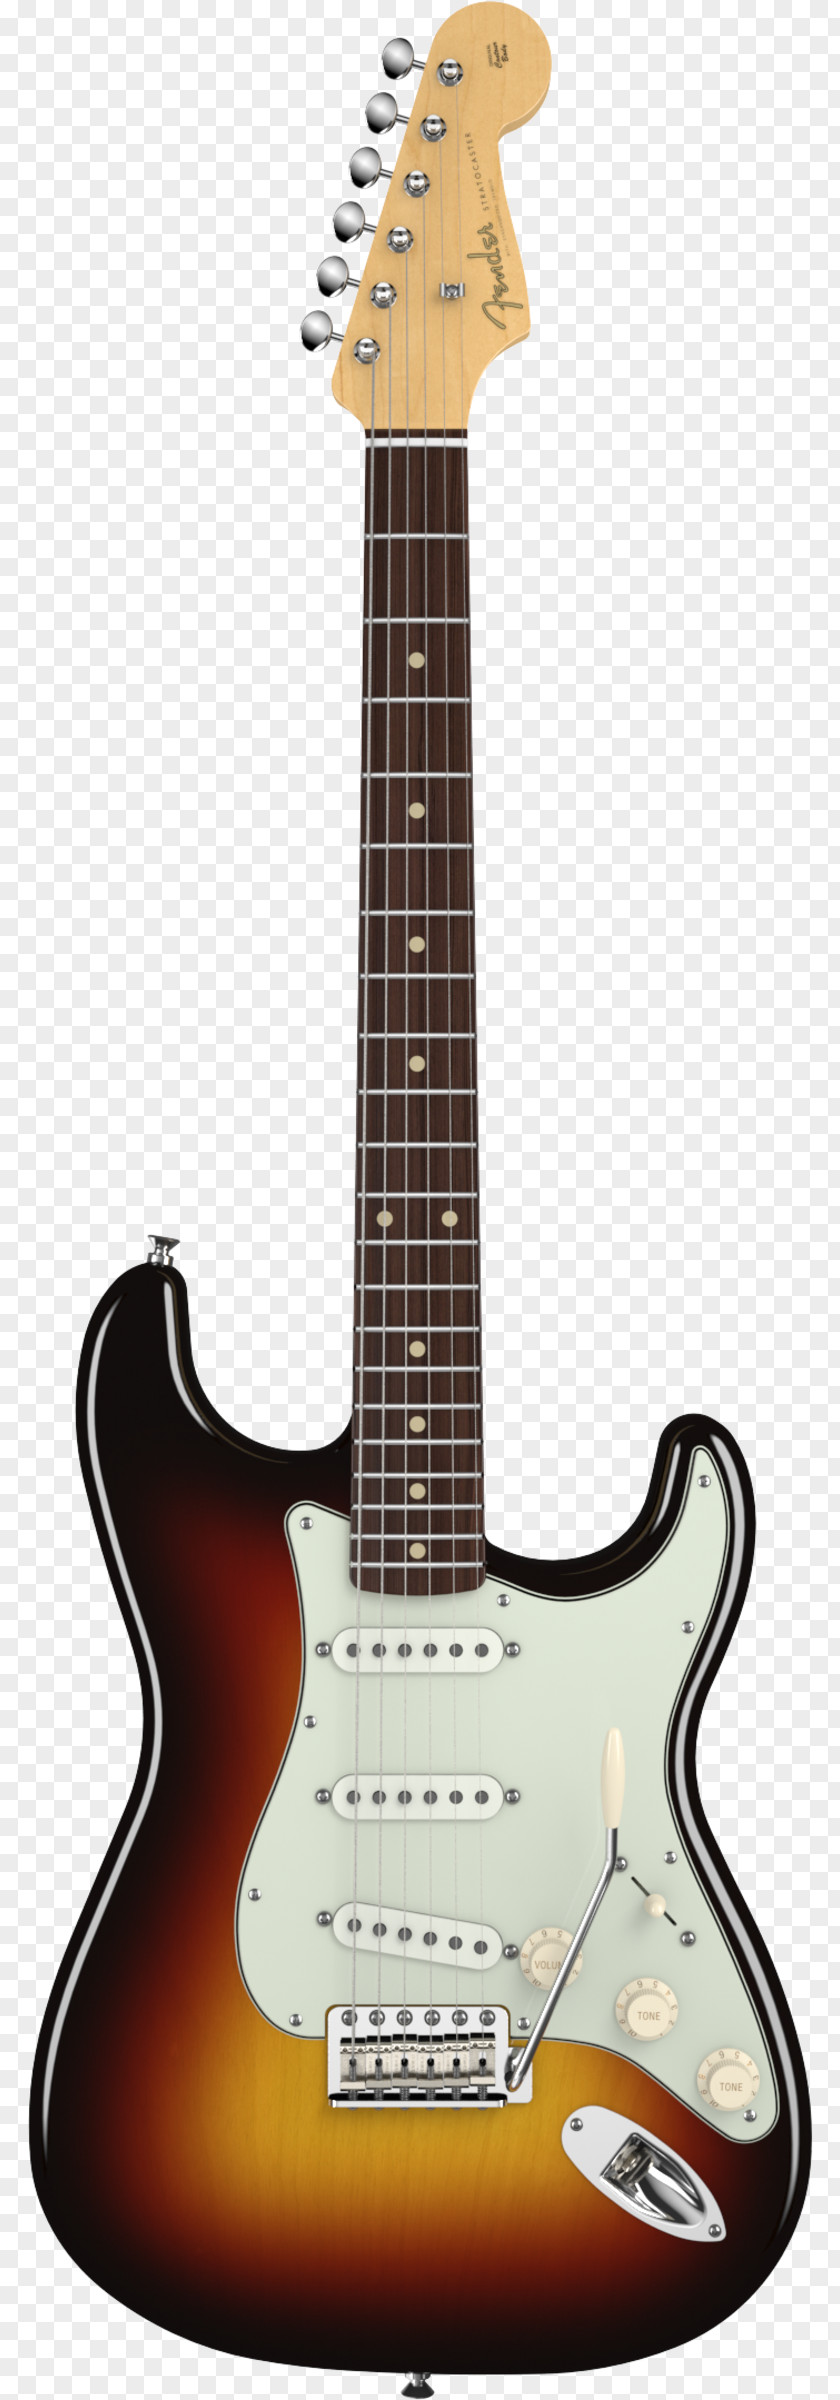 Bass Guitar Fender Stratocaster Bullet Musical Instruments Corporation Sunburst PNG